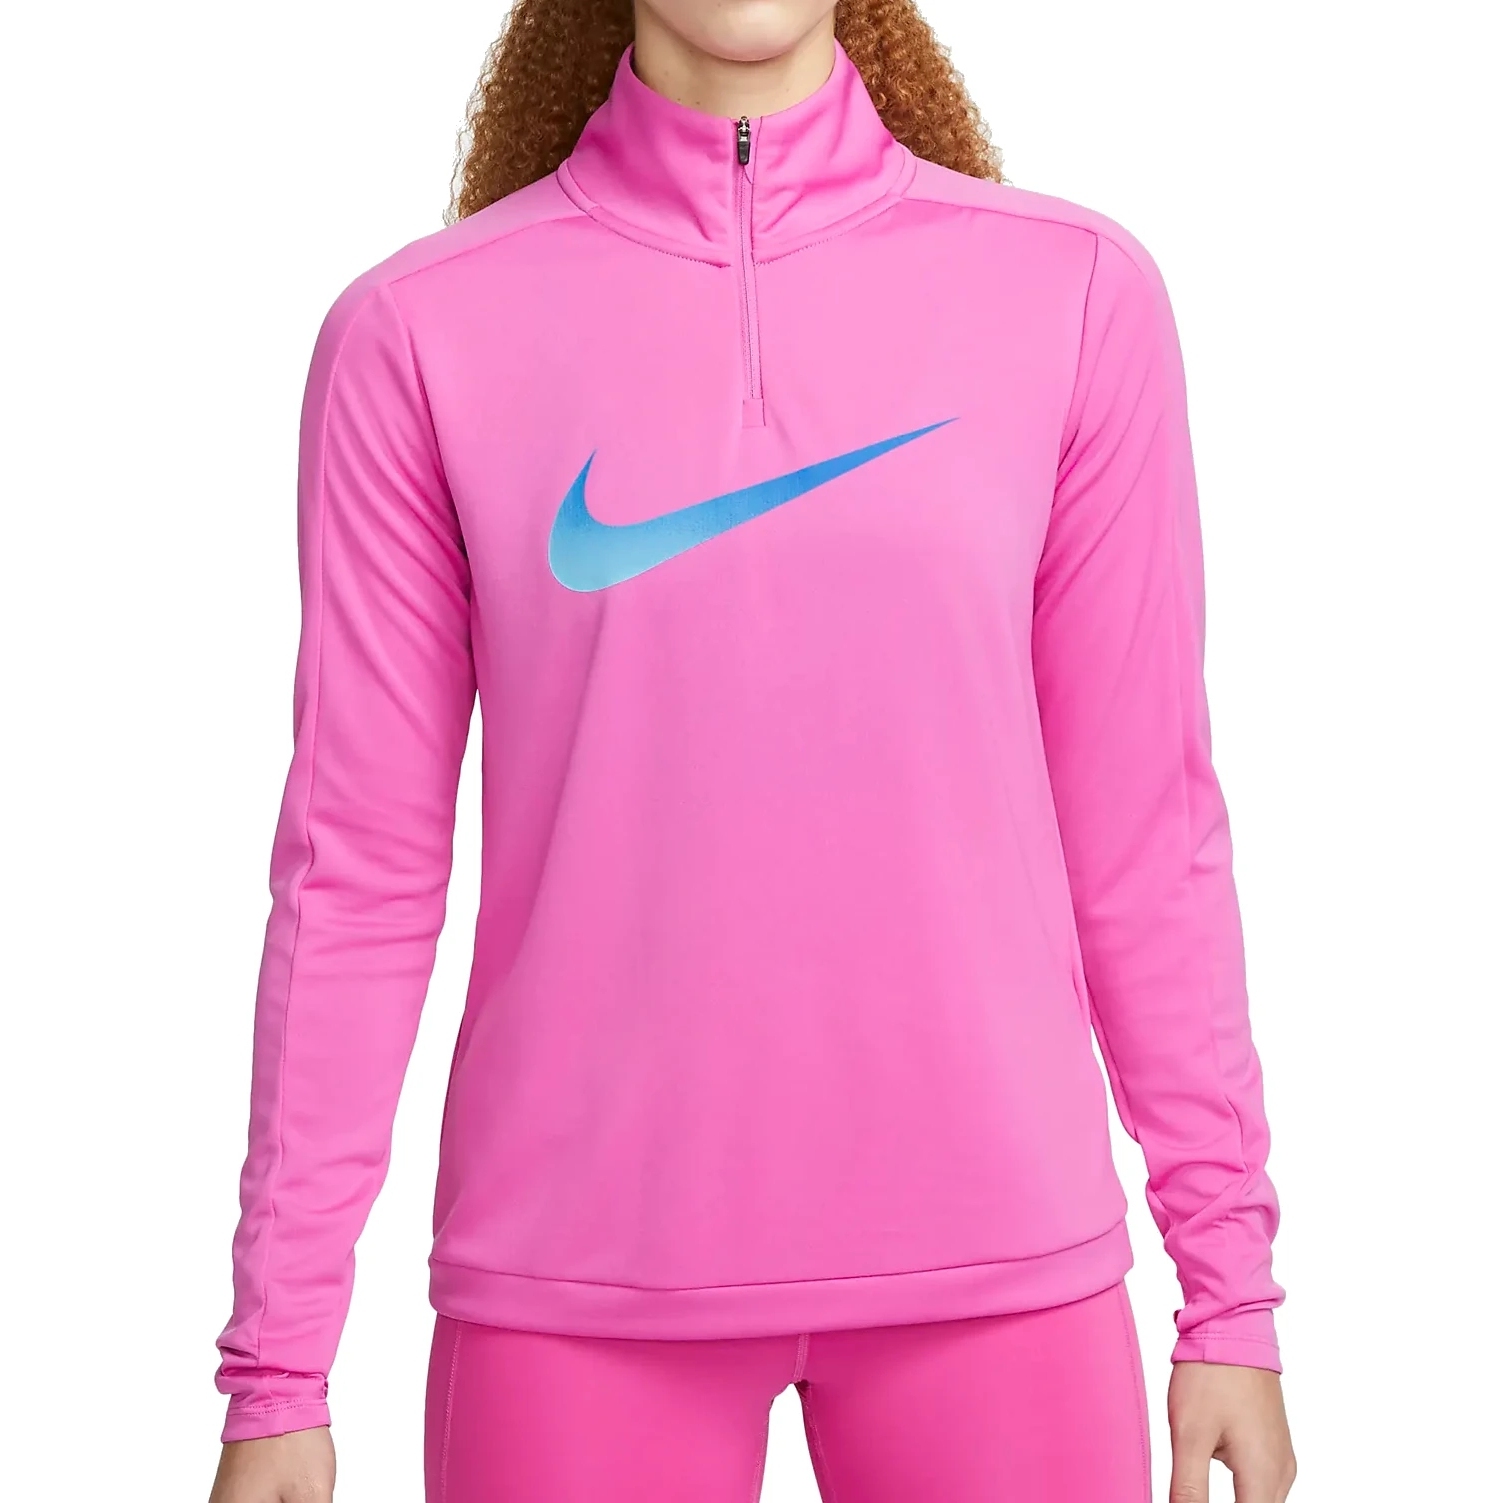 active Zip silver - Nike Long Top fuchsia/reflective Sleeve Short Swoosh Dri-FIT DX0952-623 Women